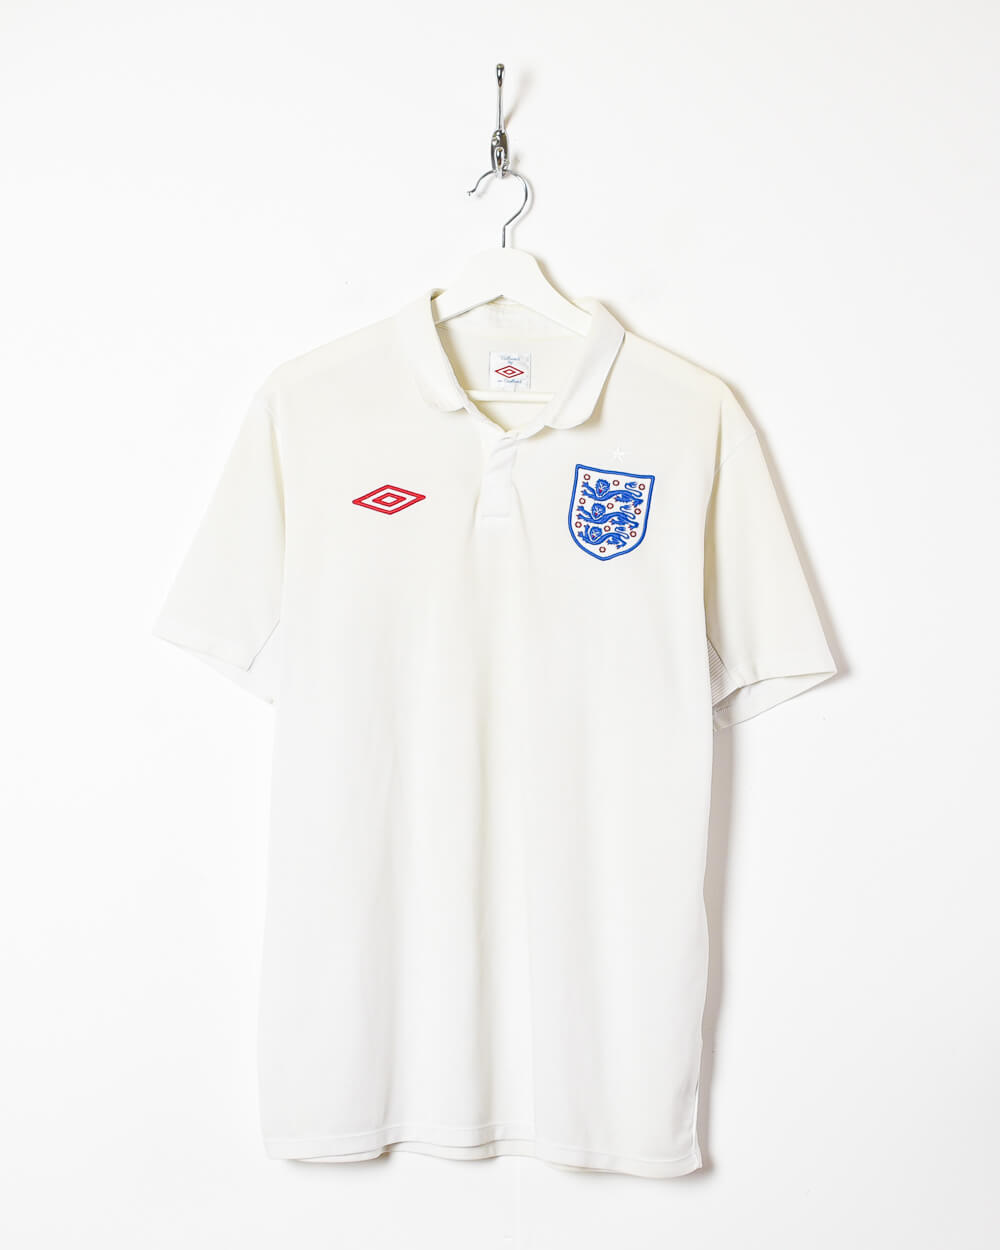 White Umbro 2009/10 England Home Shirt - Large